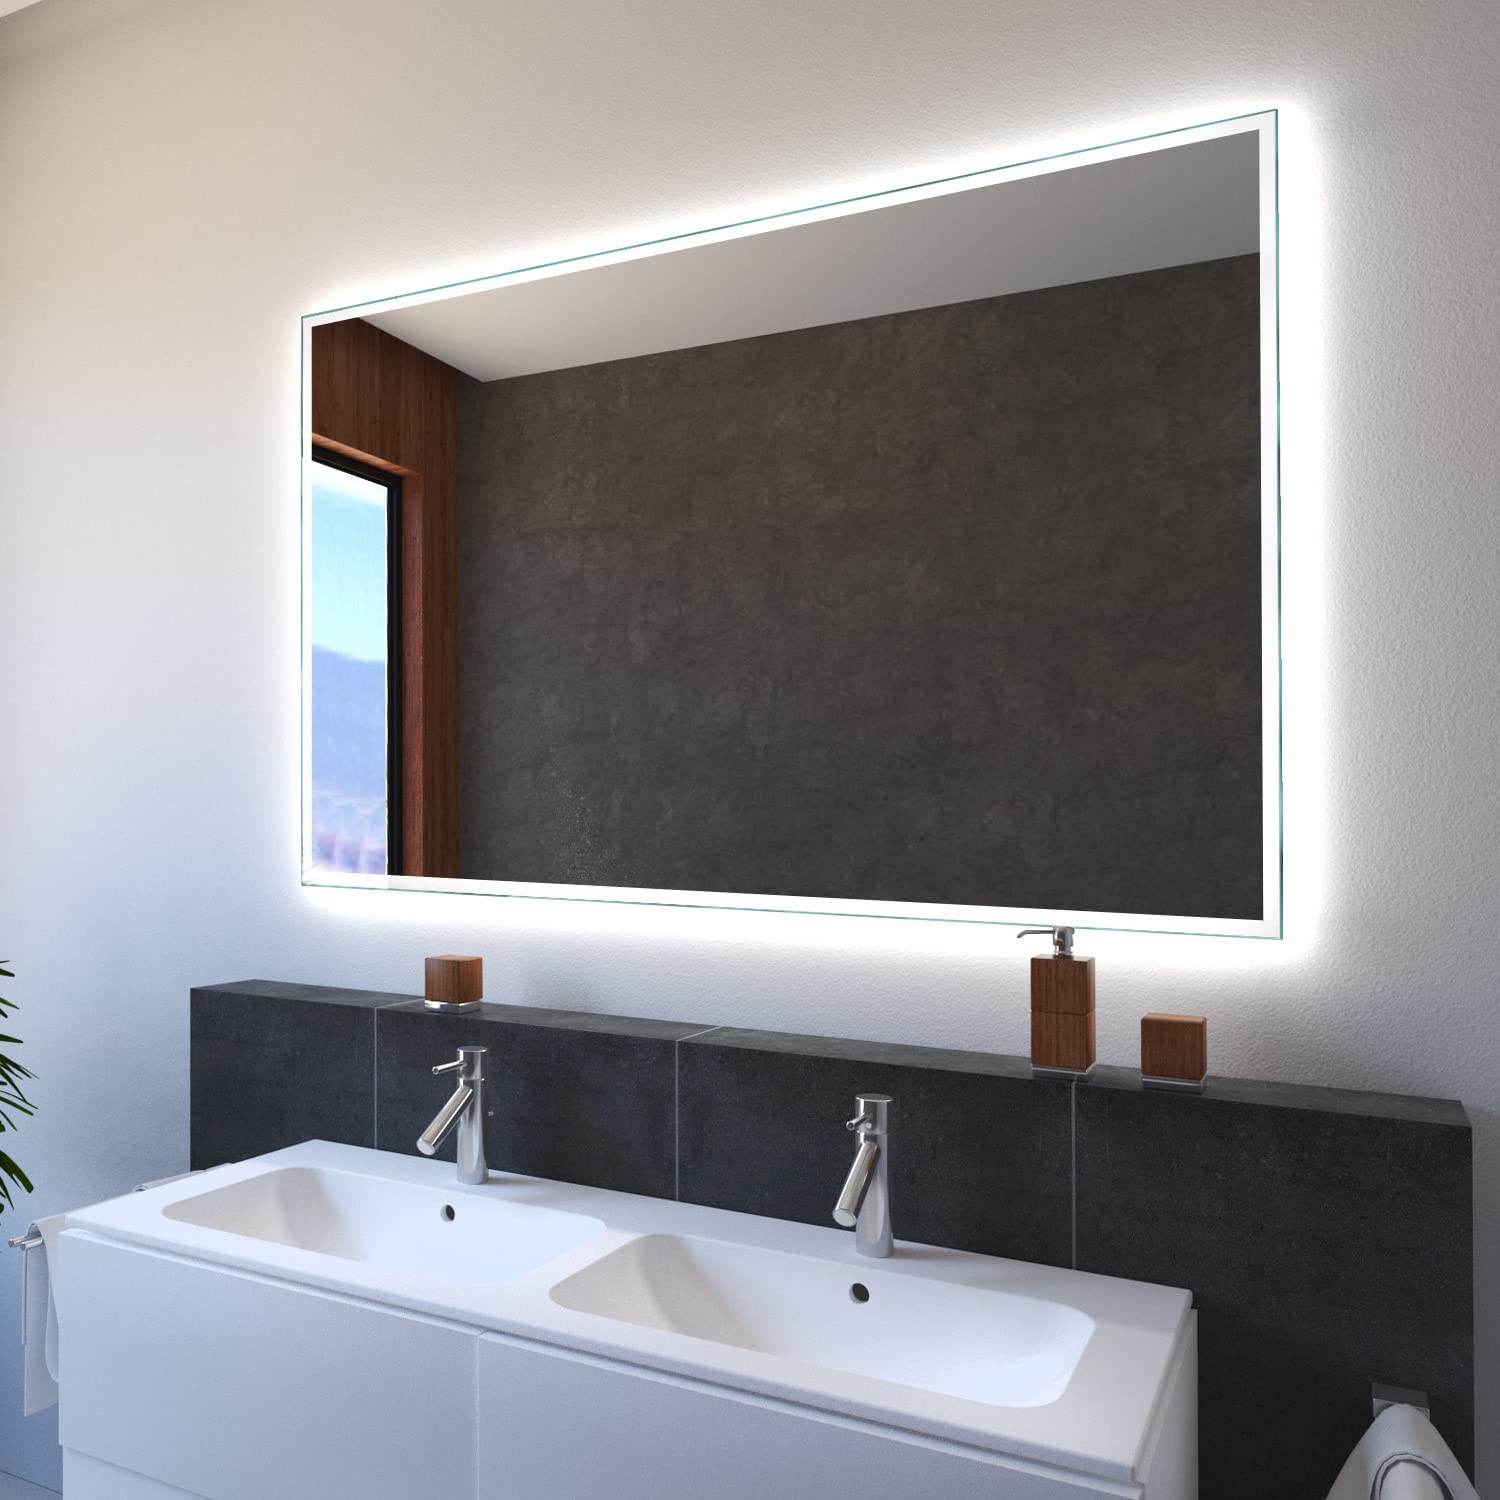 SARAR Wandspiegel mit schmaler rundum LED-Beleuchtung 70x70cm Made in Germany Designo MA4111 Badspiegel Spiegel mit Beleuchtung Badezimmerspiegel nach-auf Maß